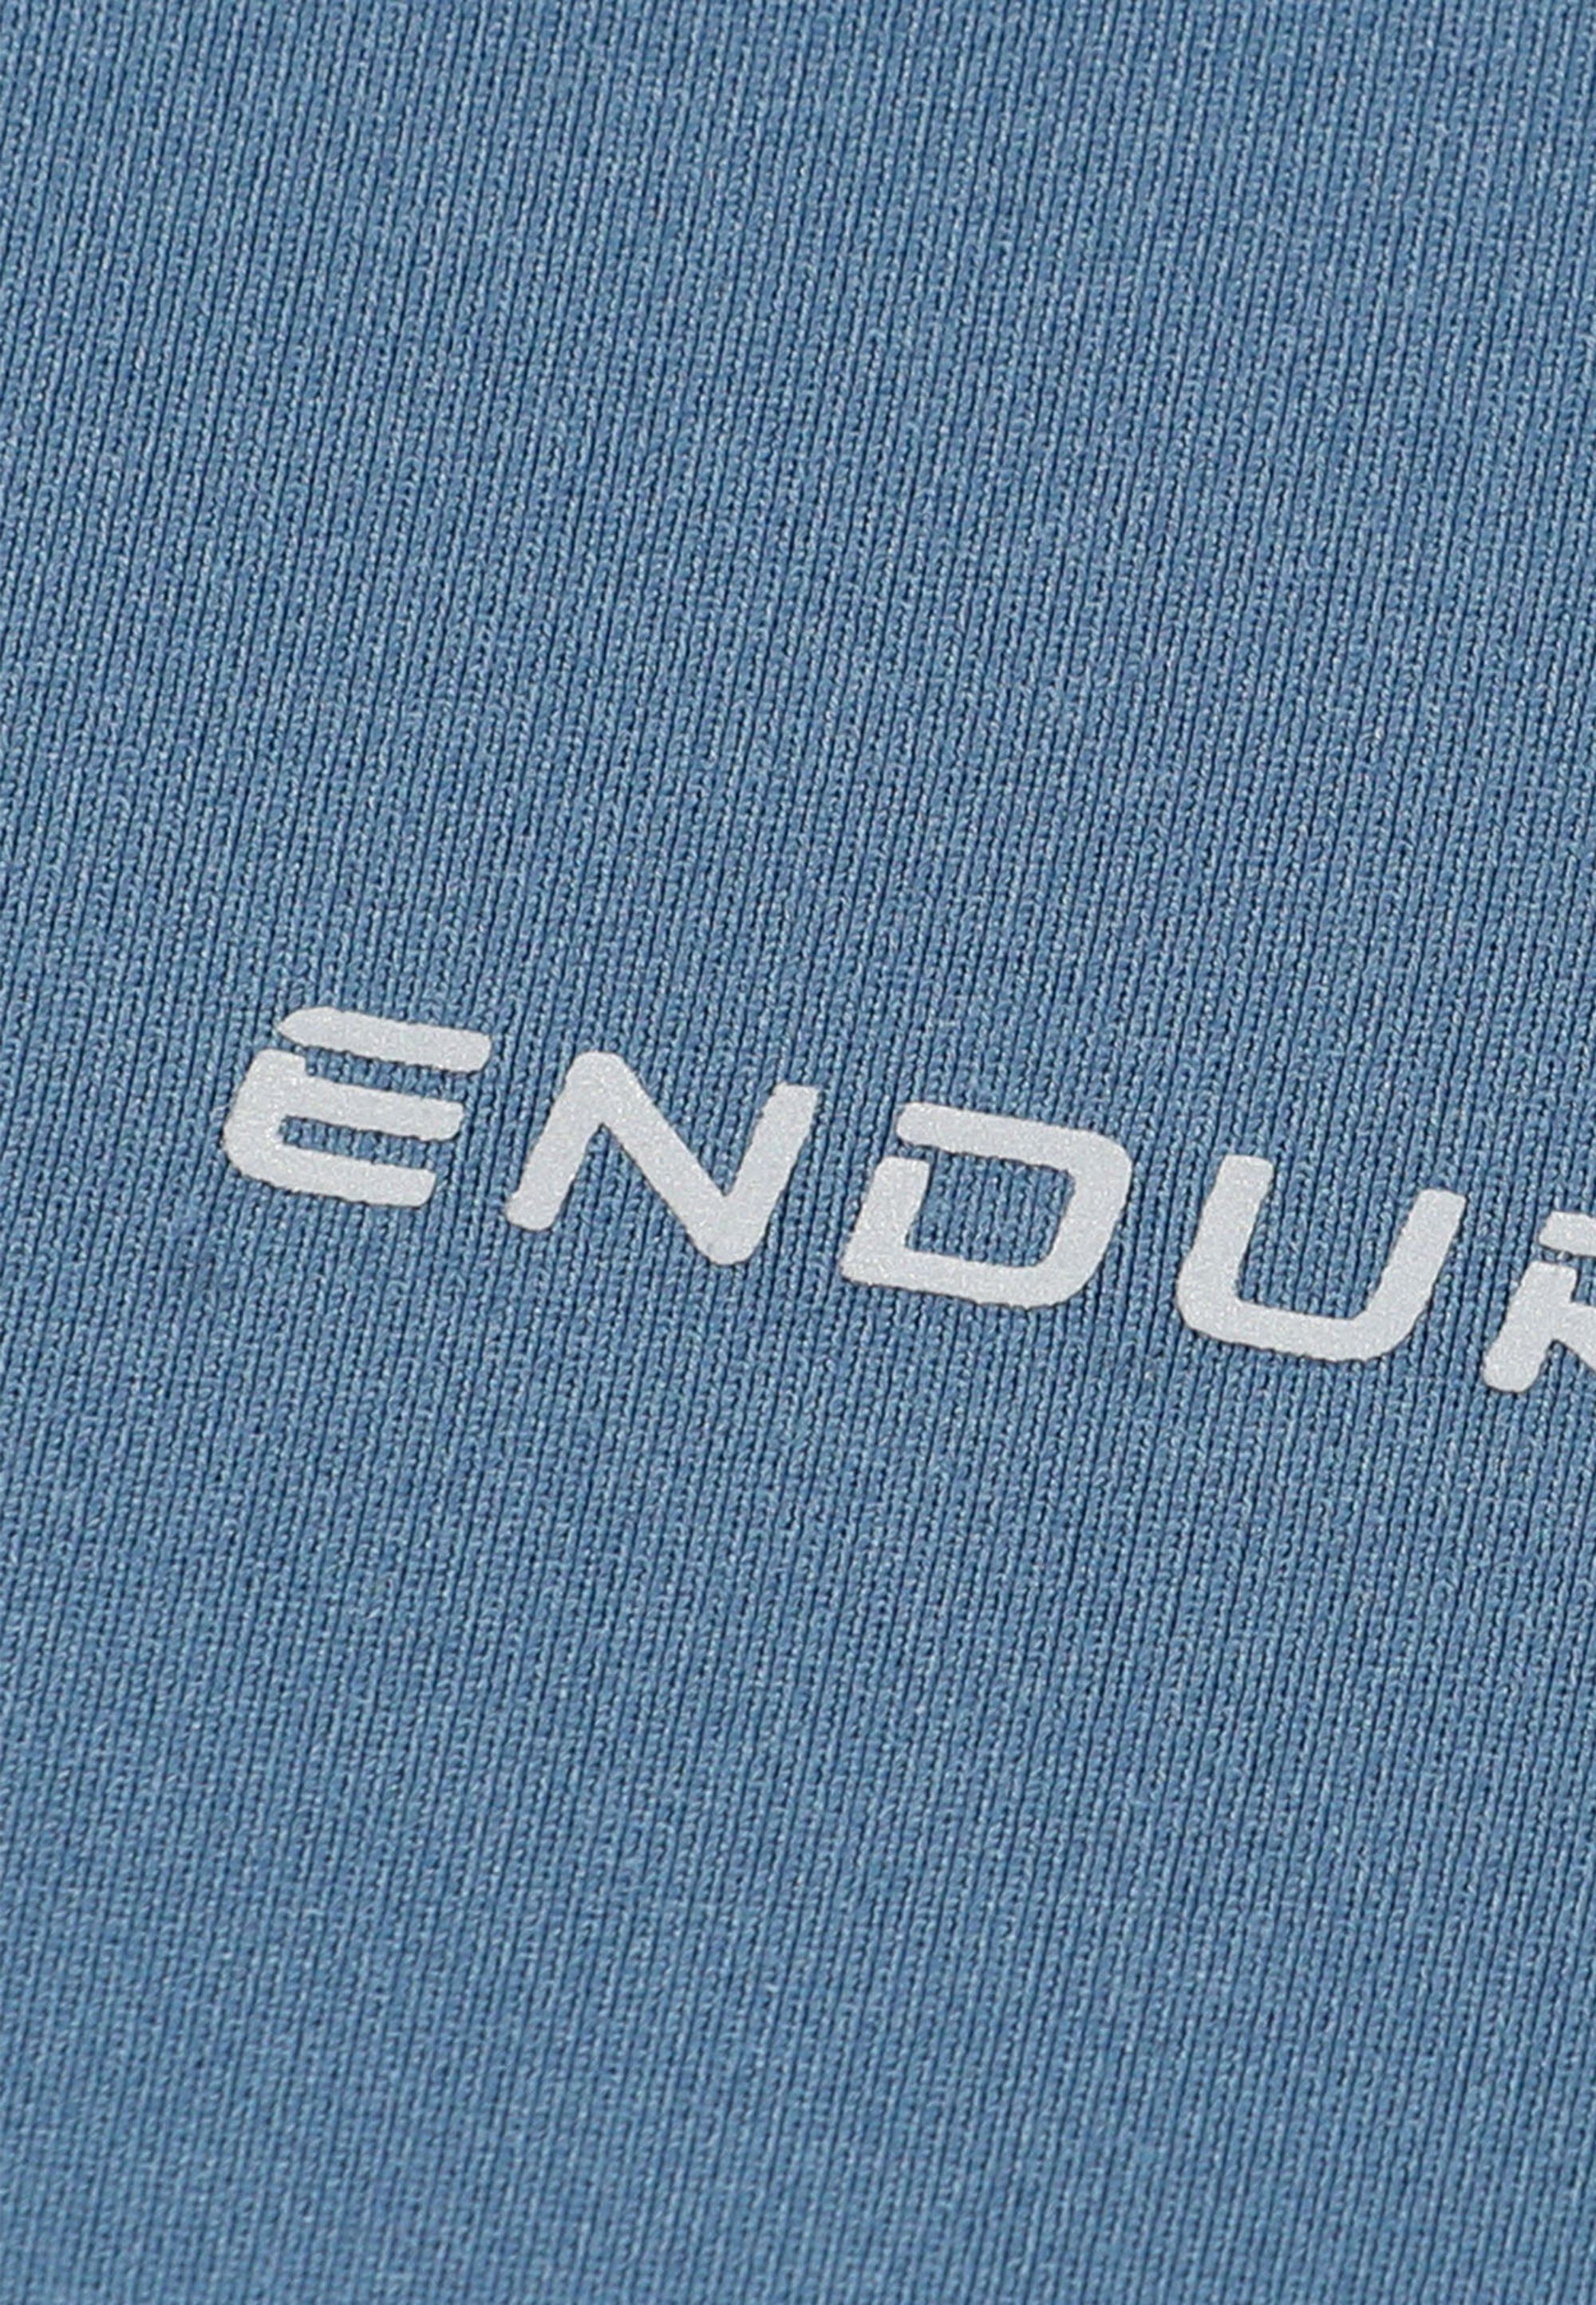 (1-tlg) Langarmshirt mit LANBARK Sportausstattung ENDURANCE blau hochwertiger